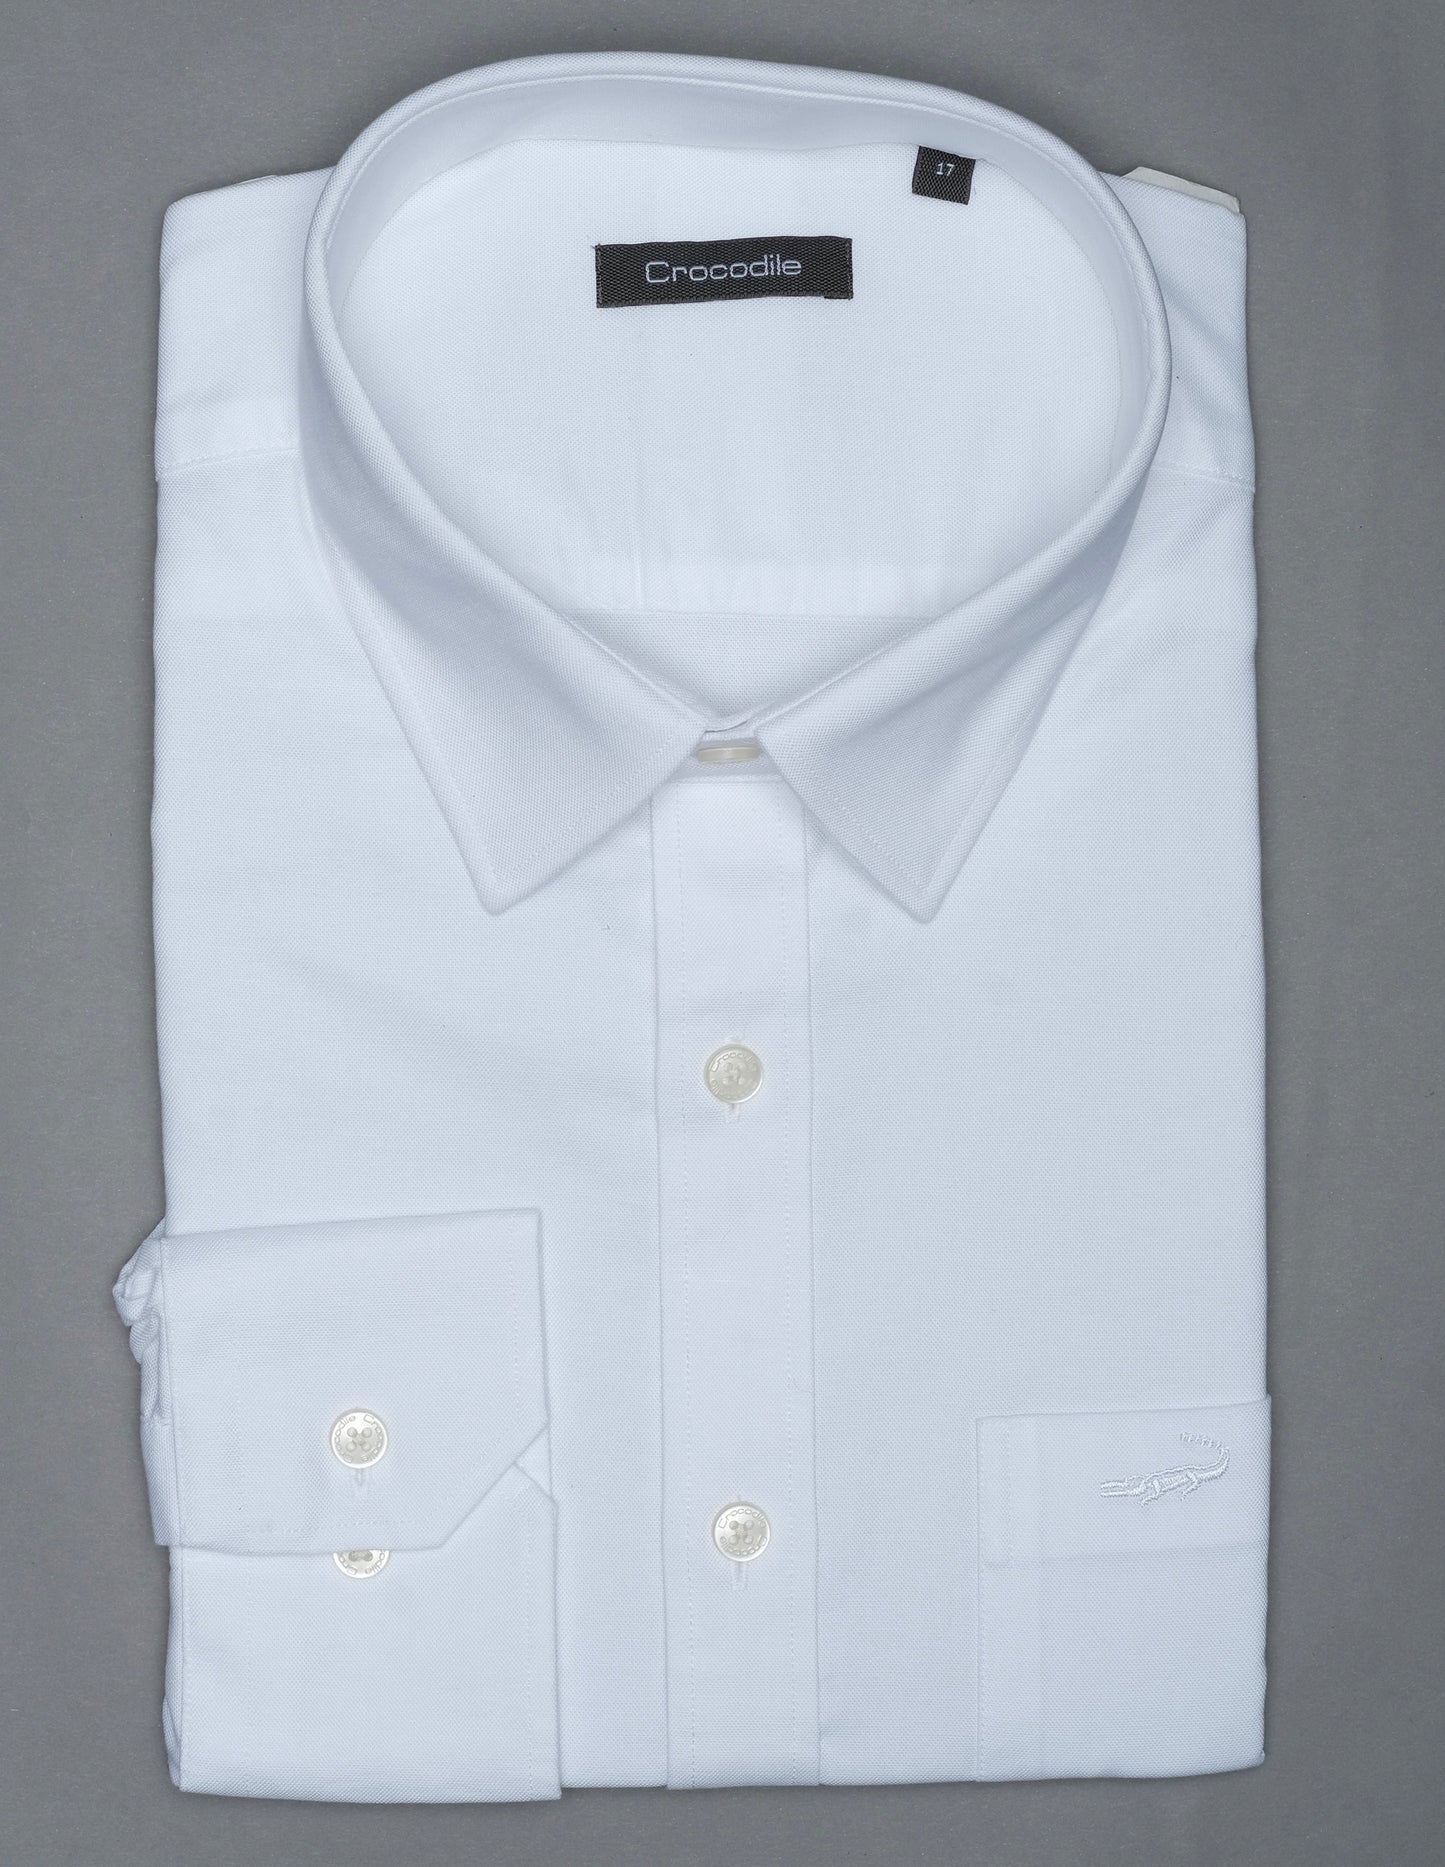 Slim Fit Long sleeves-Formal Shirts  - White